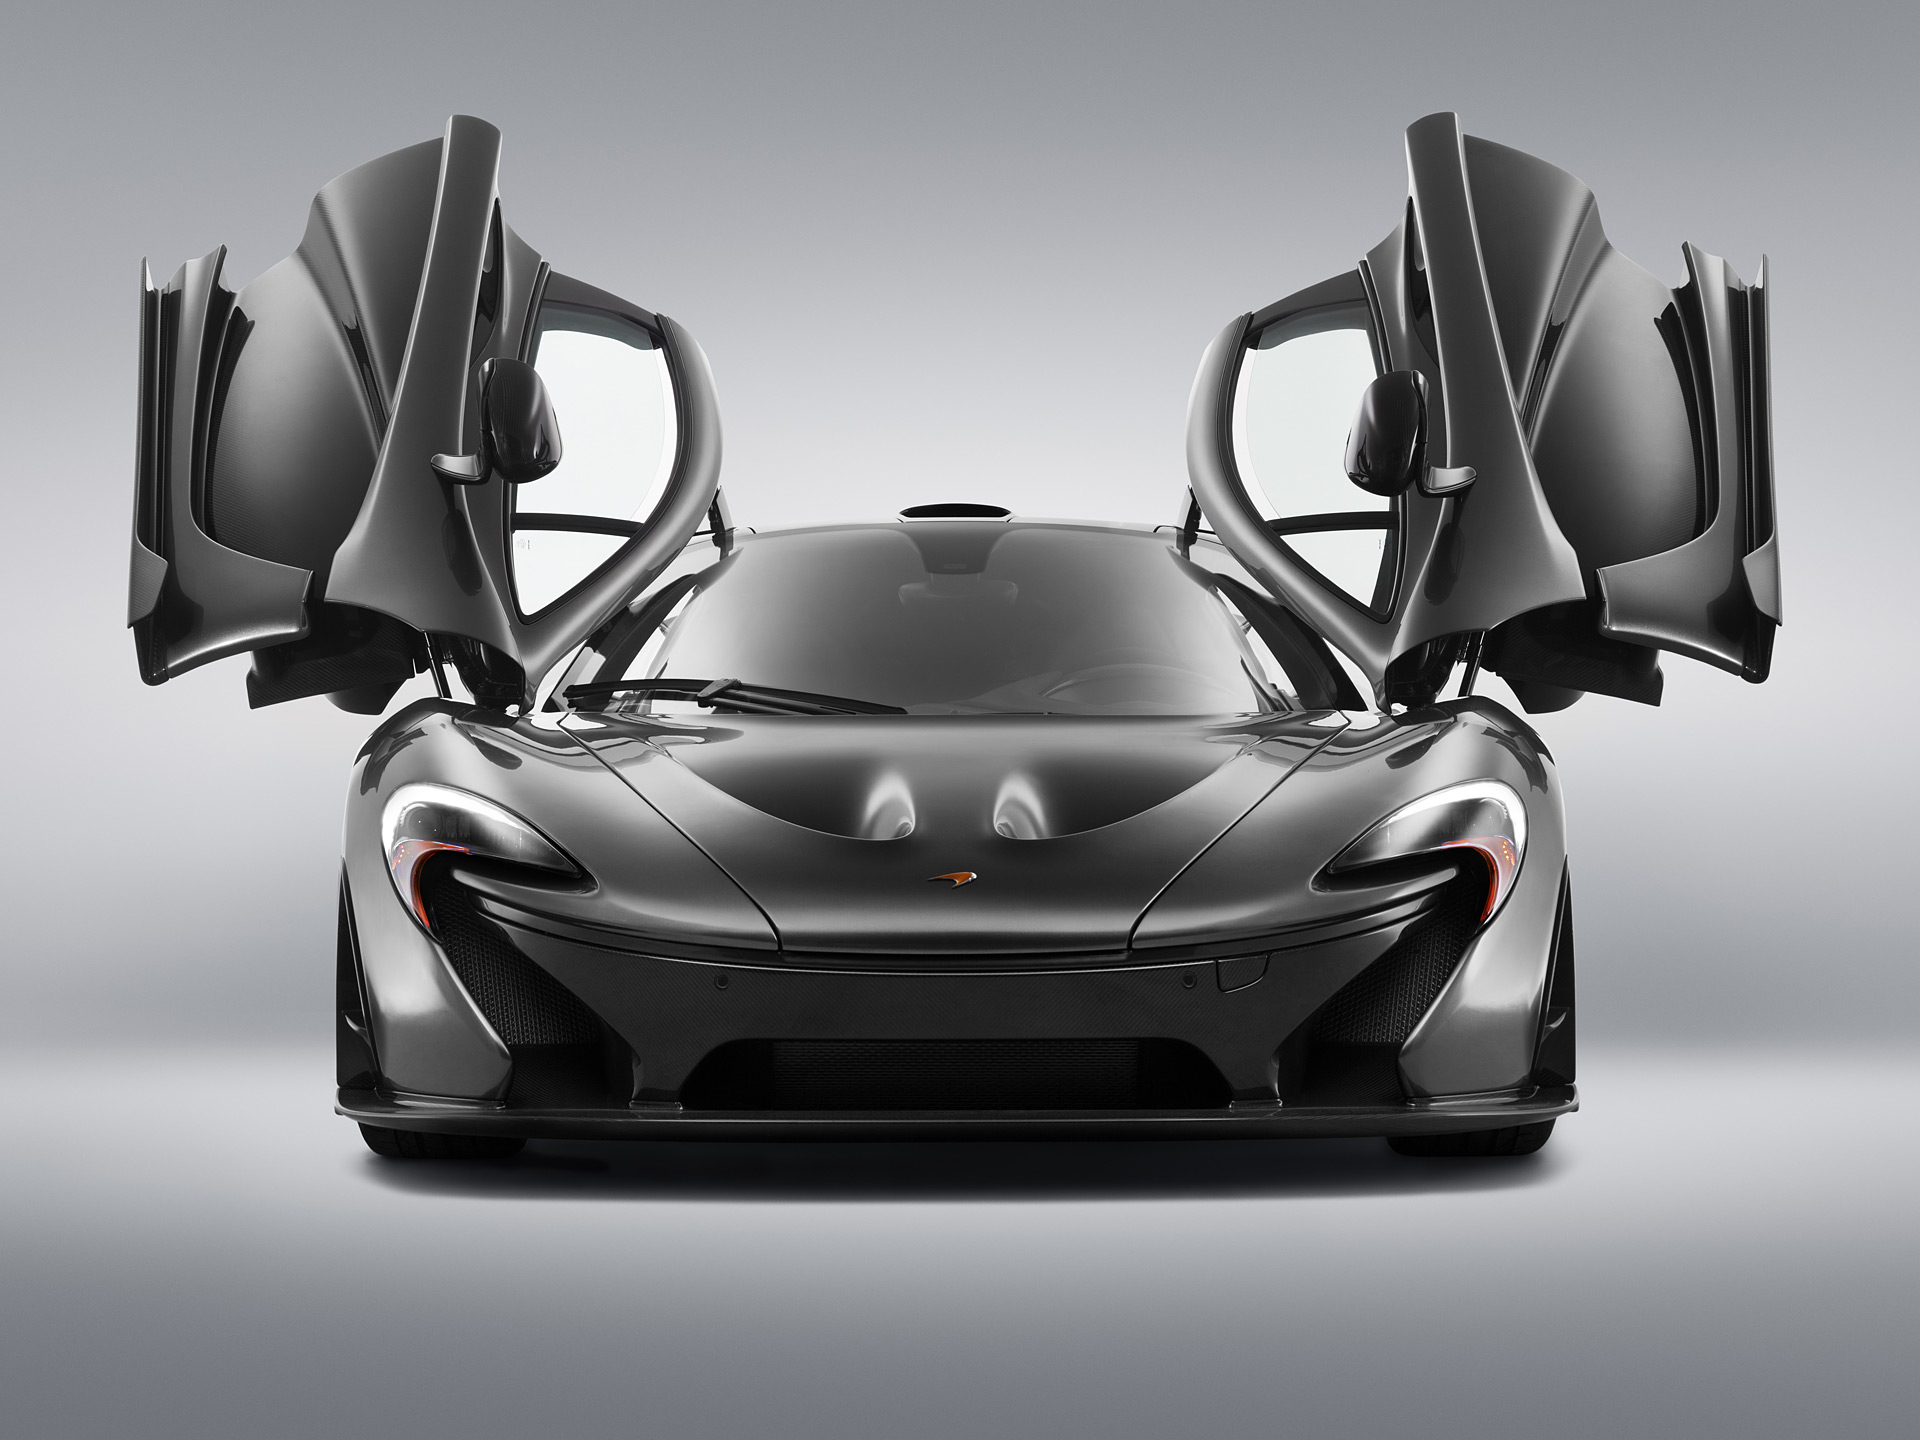  2015 McLaren P1 Carbon Edition Wallpaper.